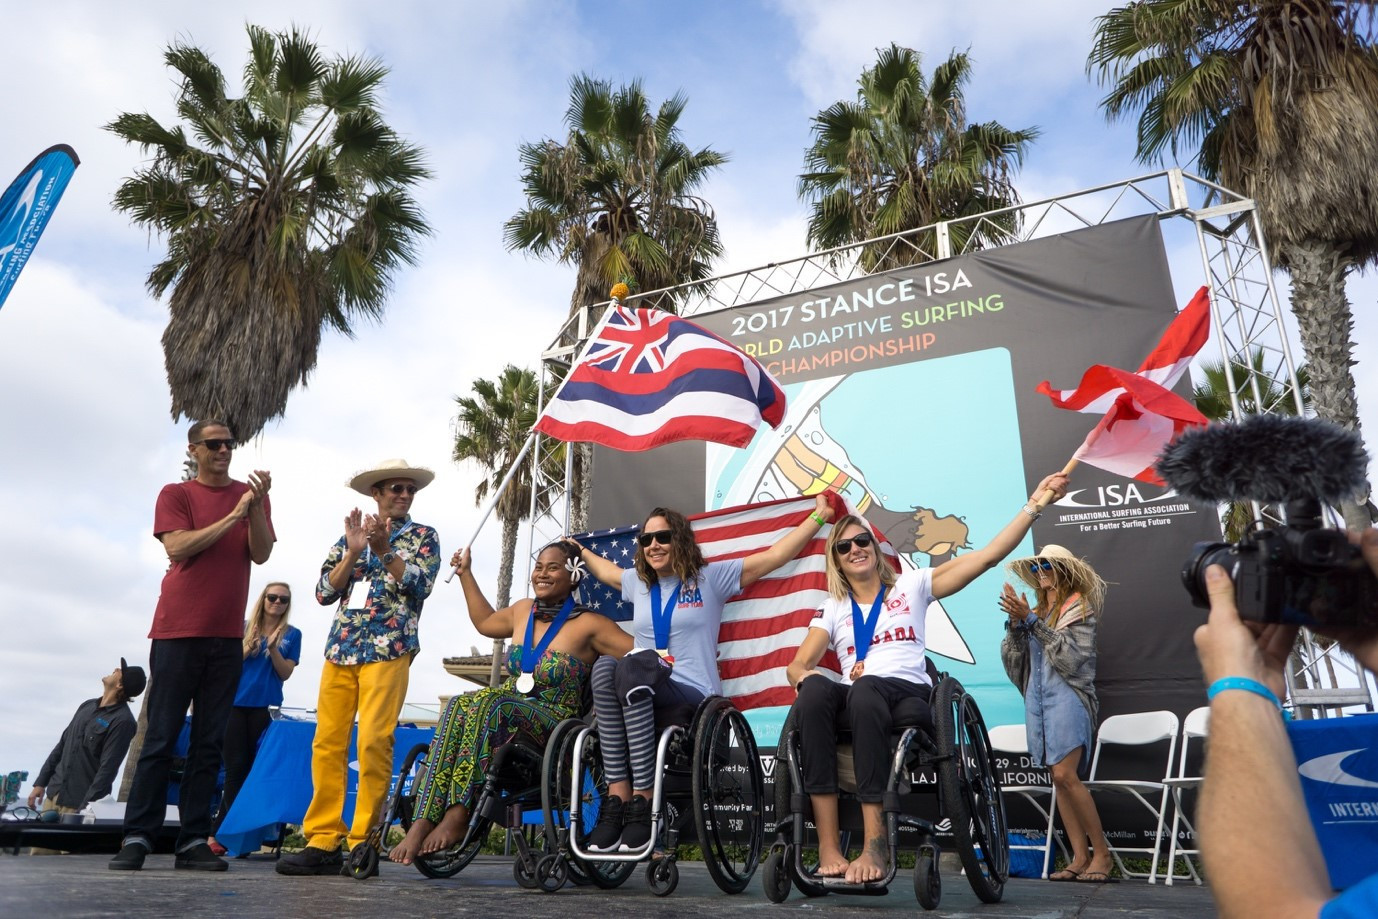 La Jolla in California to host ISA World Adaptive Surfing Championship